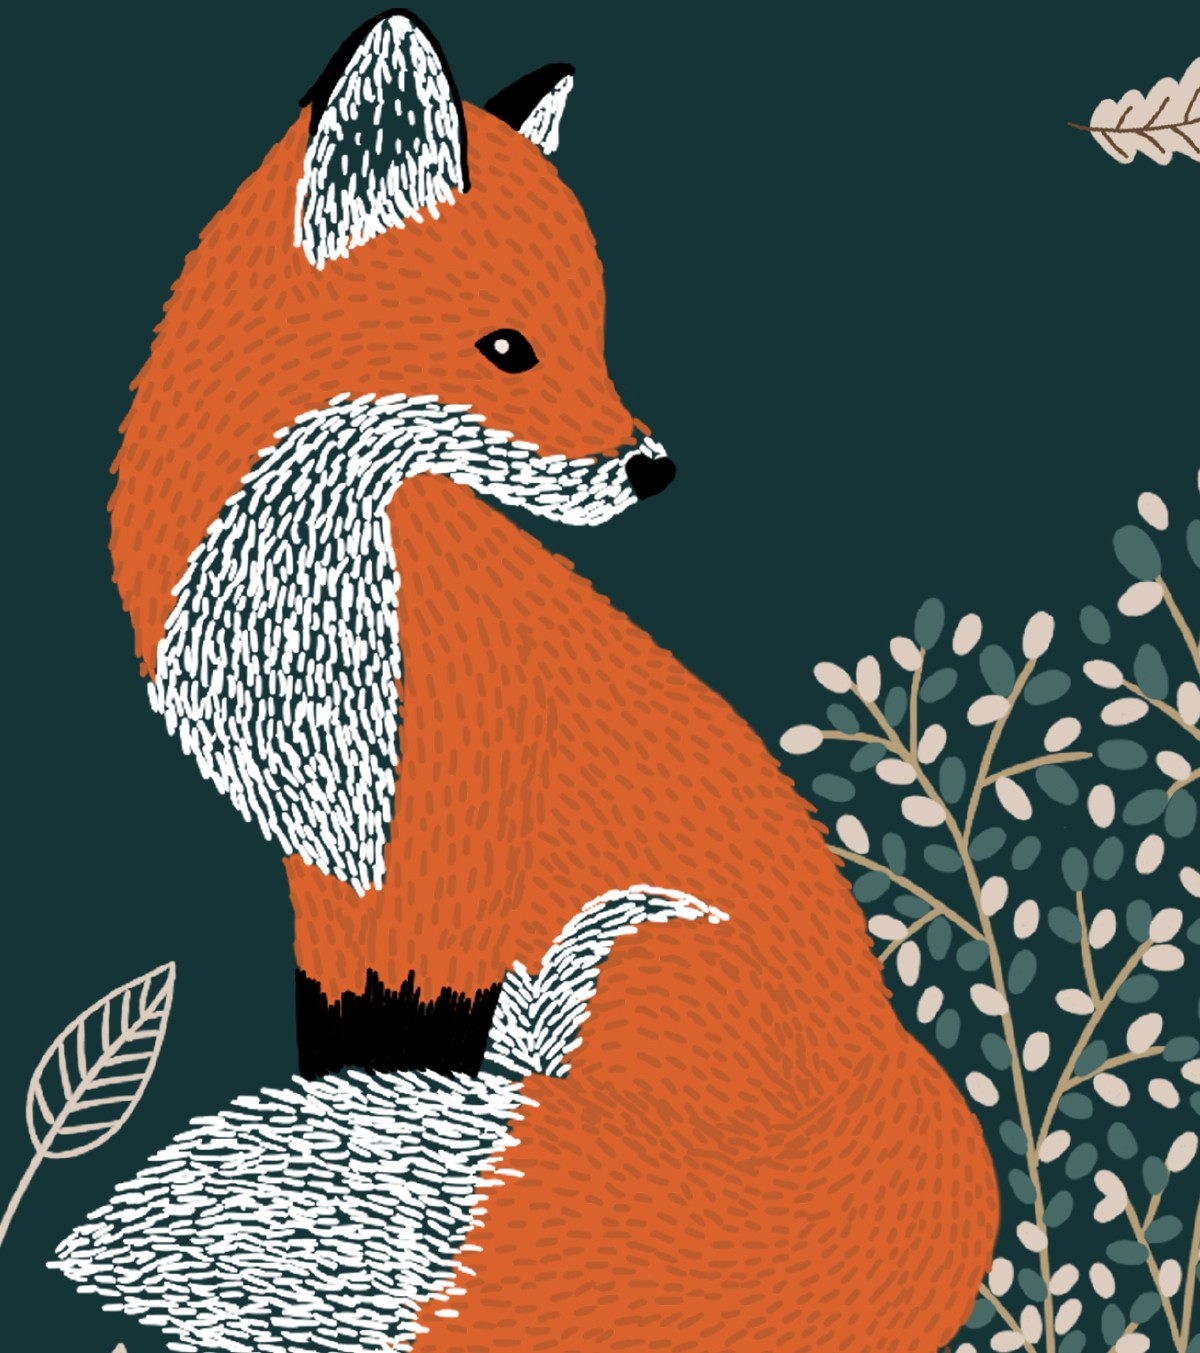 Mr. FOX - Children's poster - Fox and rabbit